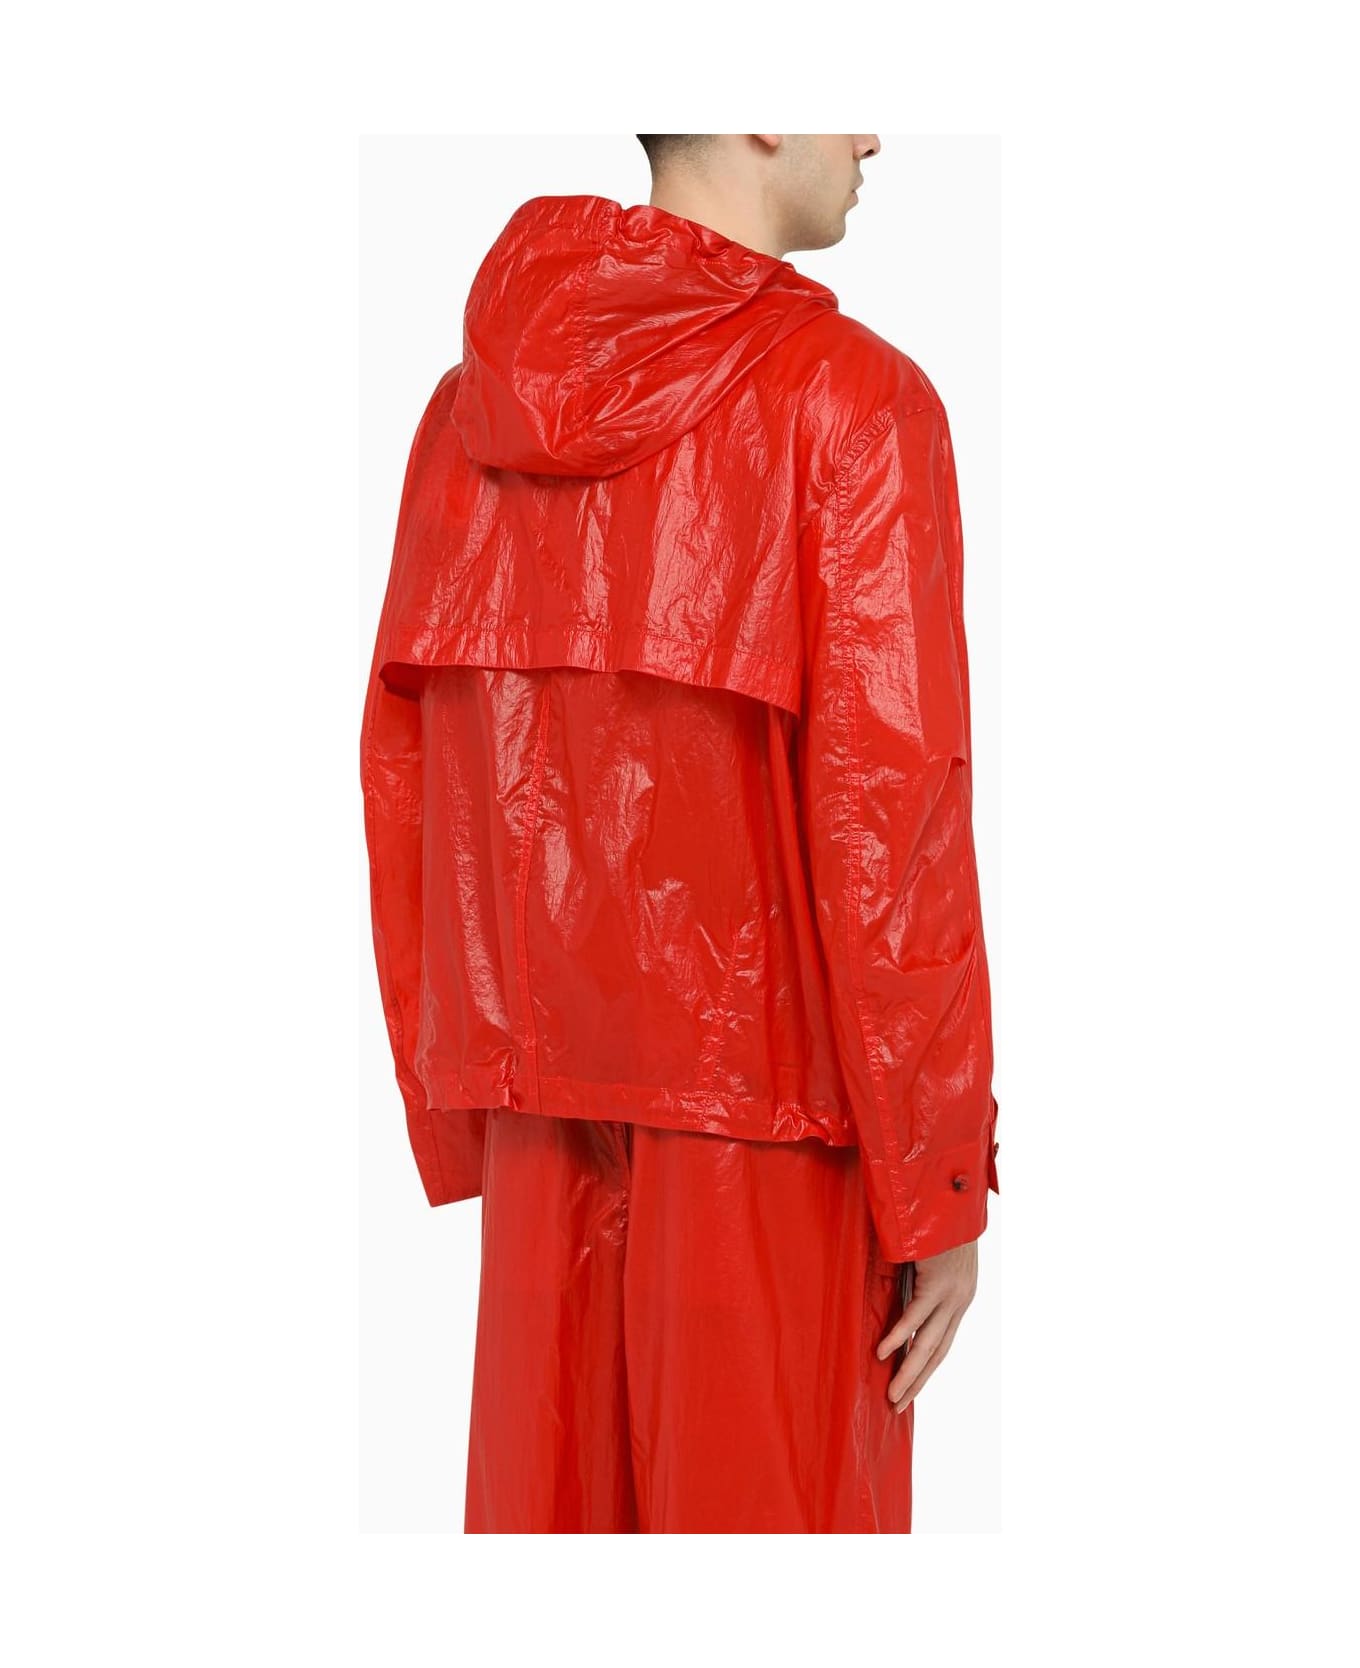 Ferragamo Lightweight Red Nylon Jacket - RED